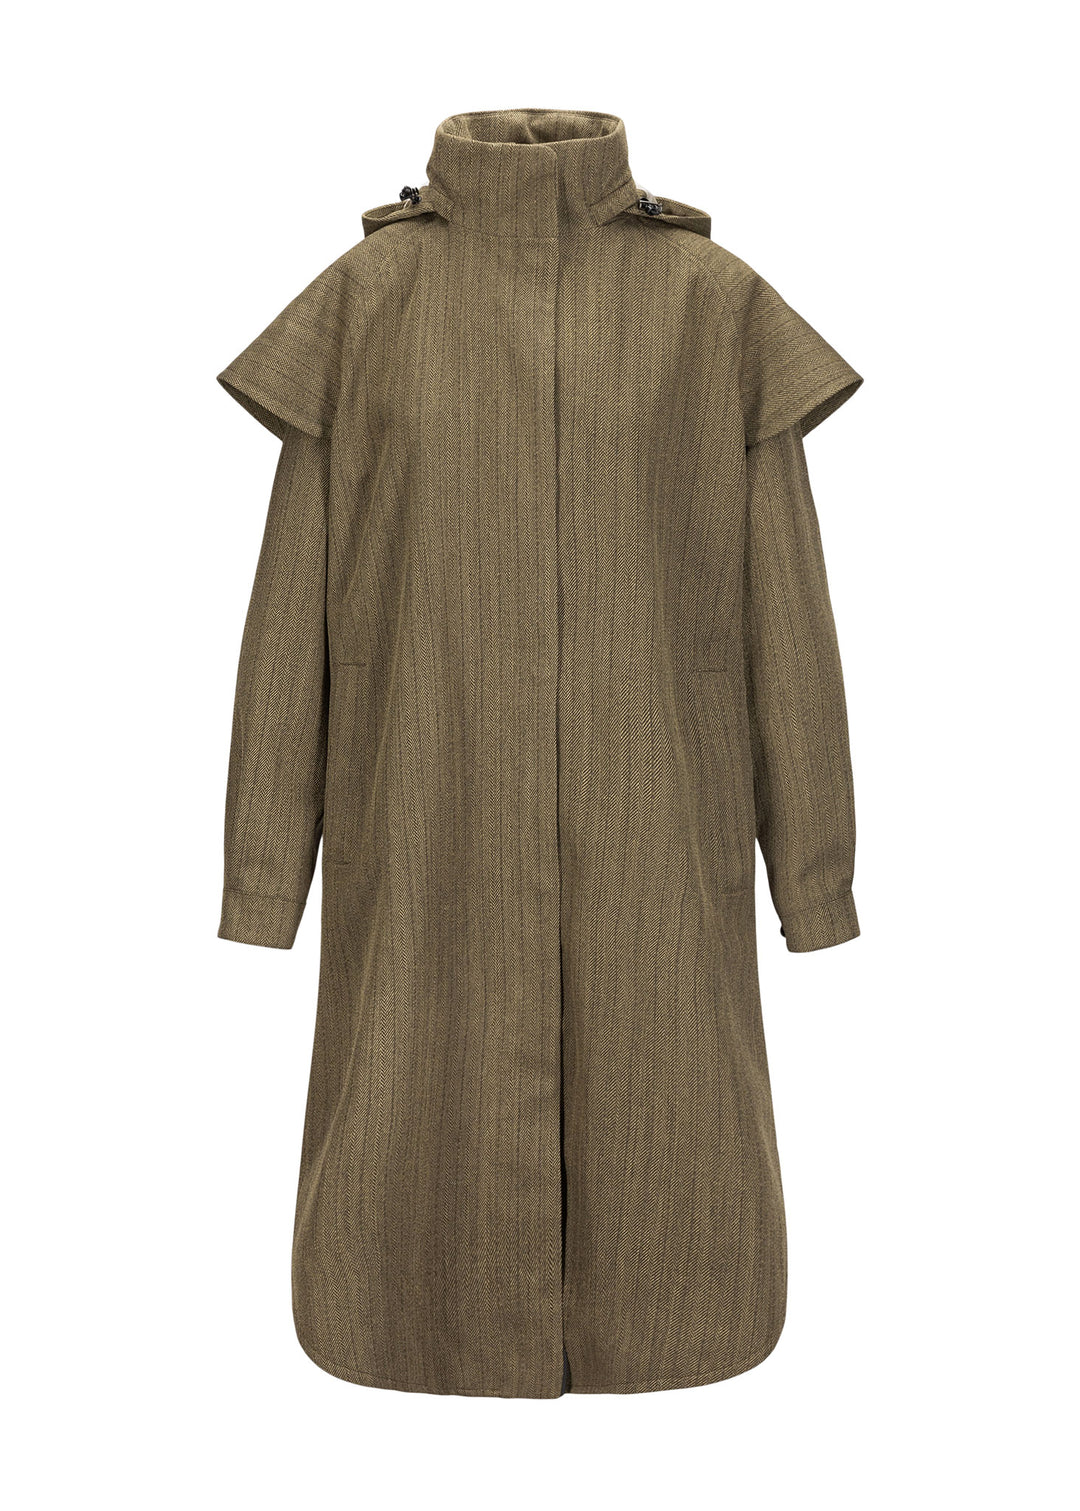 BRGN by Lunde & Gaundal Tyfon Coat Coats 860 Green Tweed